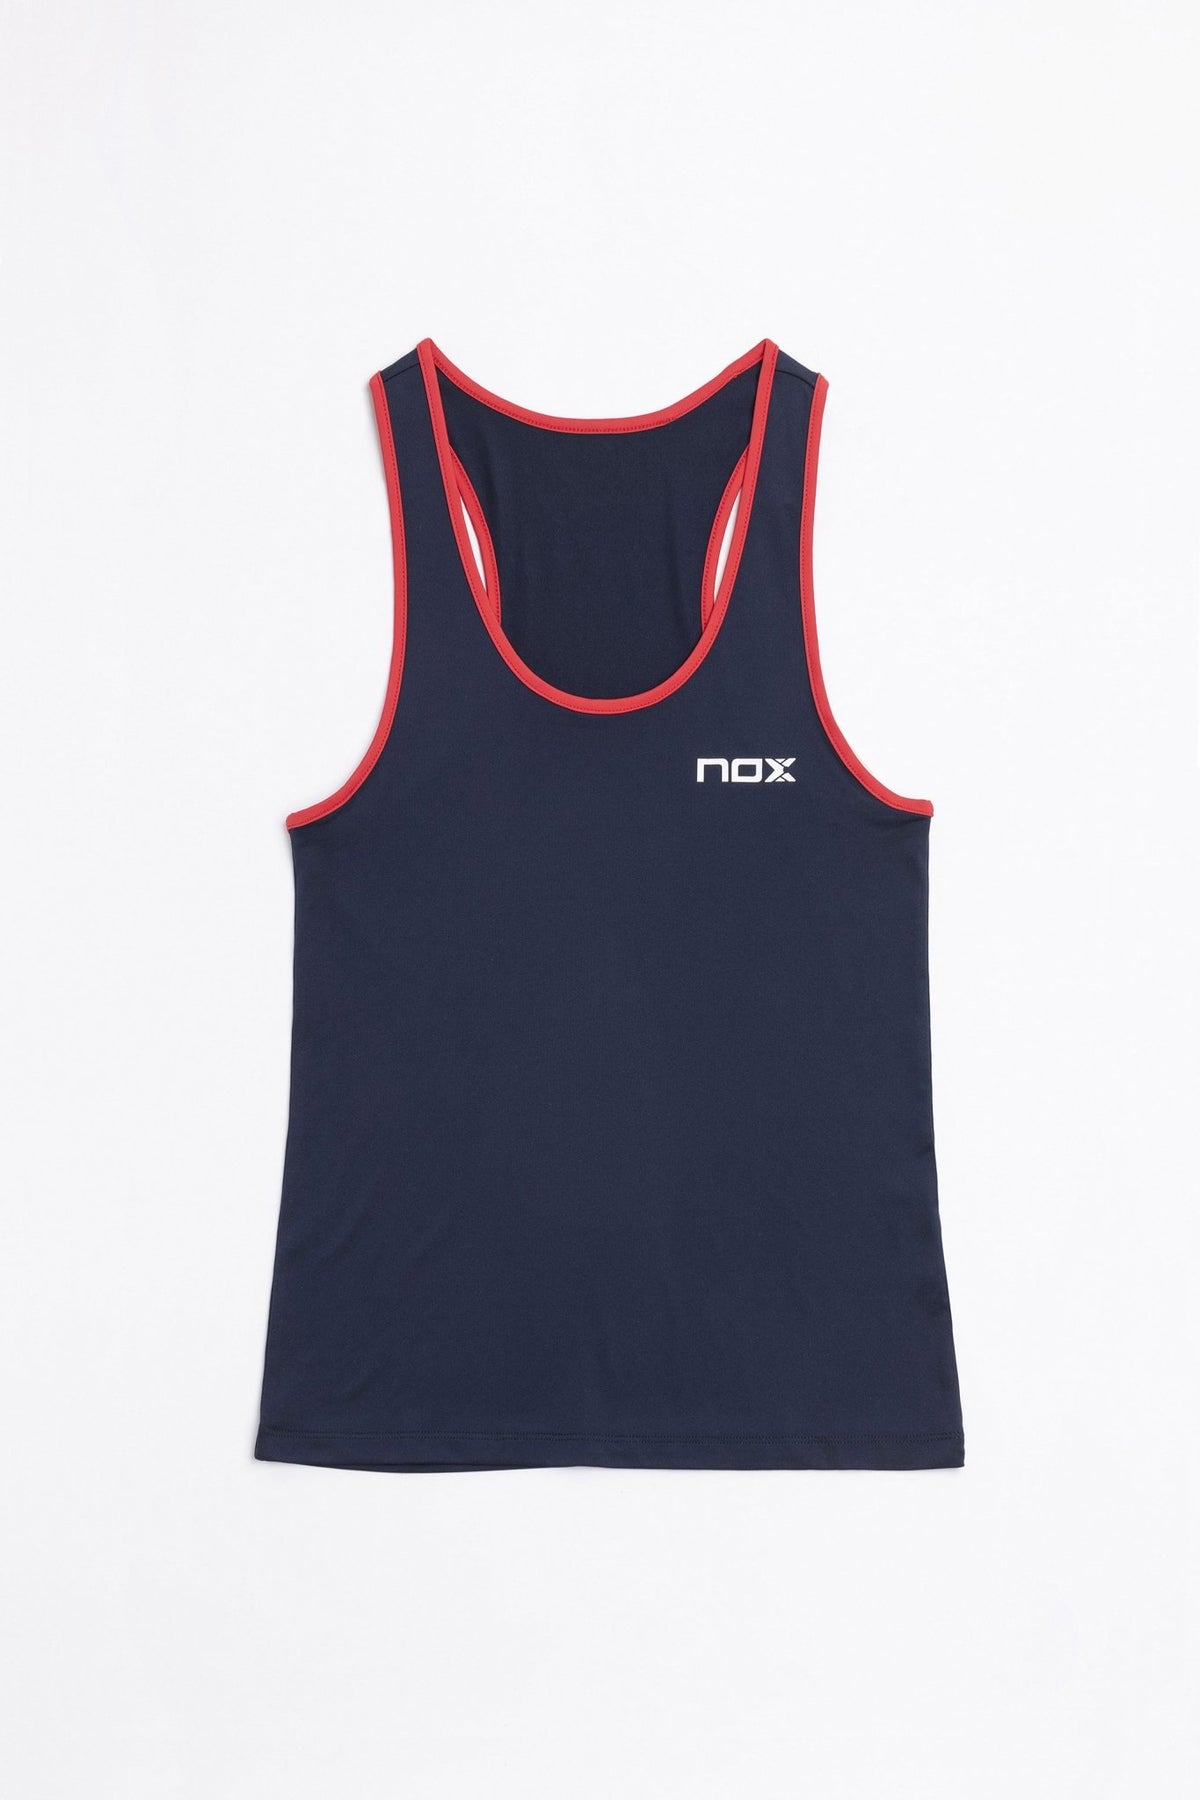 NOX Pro Damen Padel Shirt - marineblau